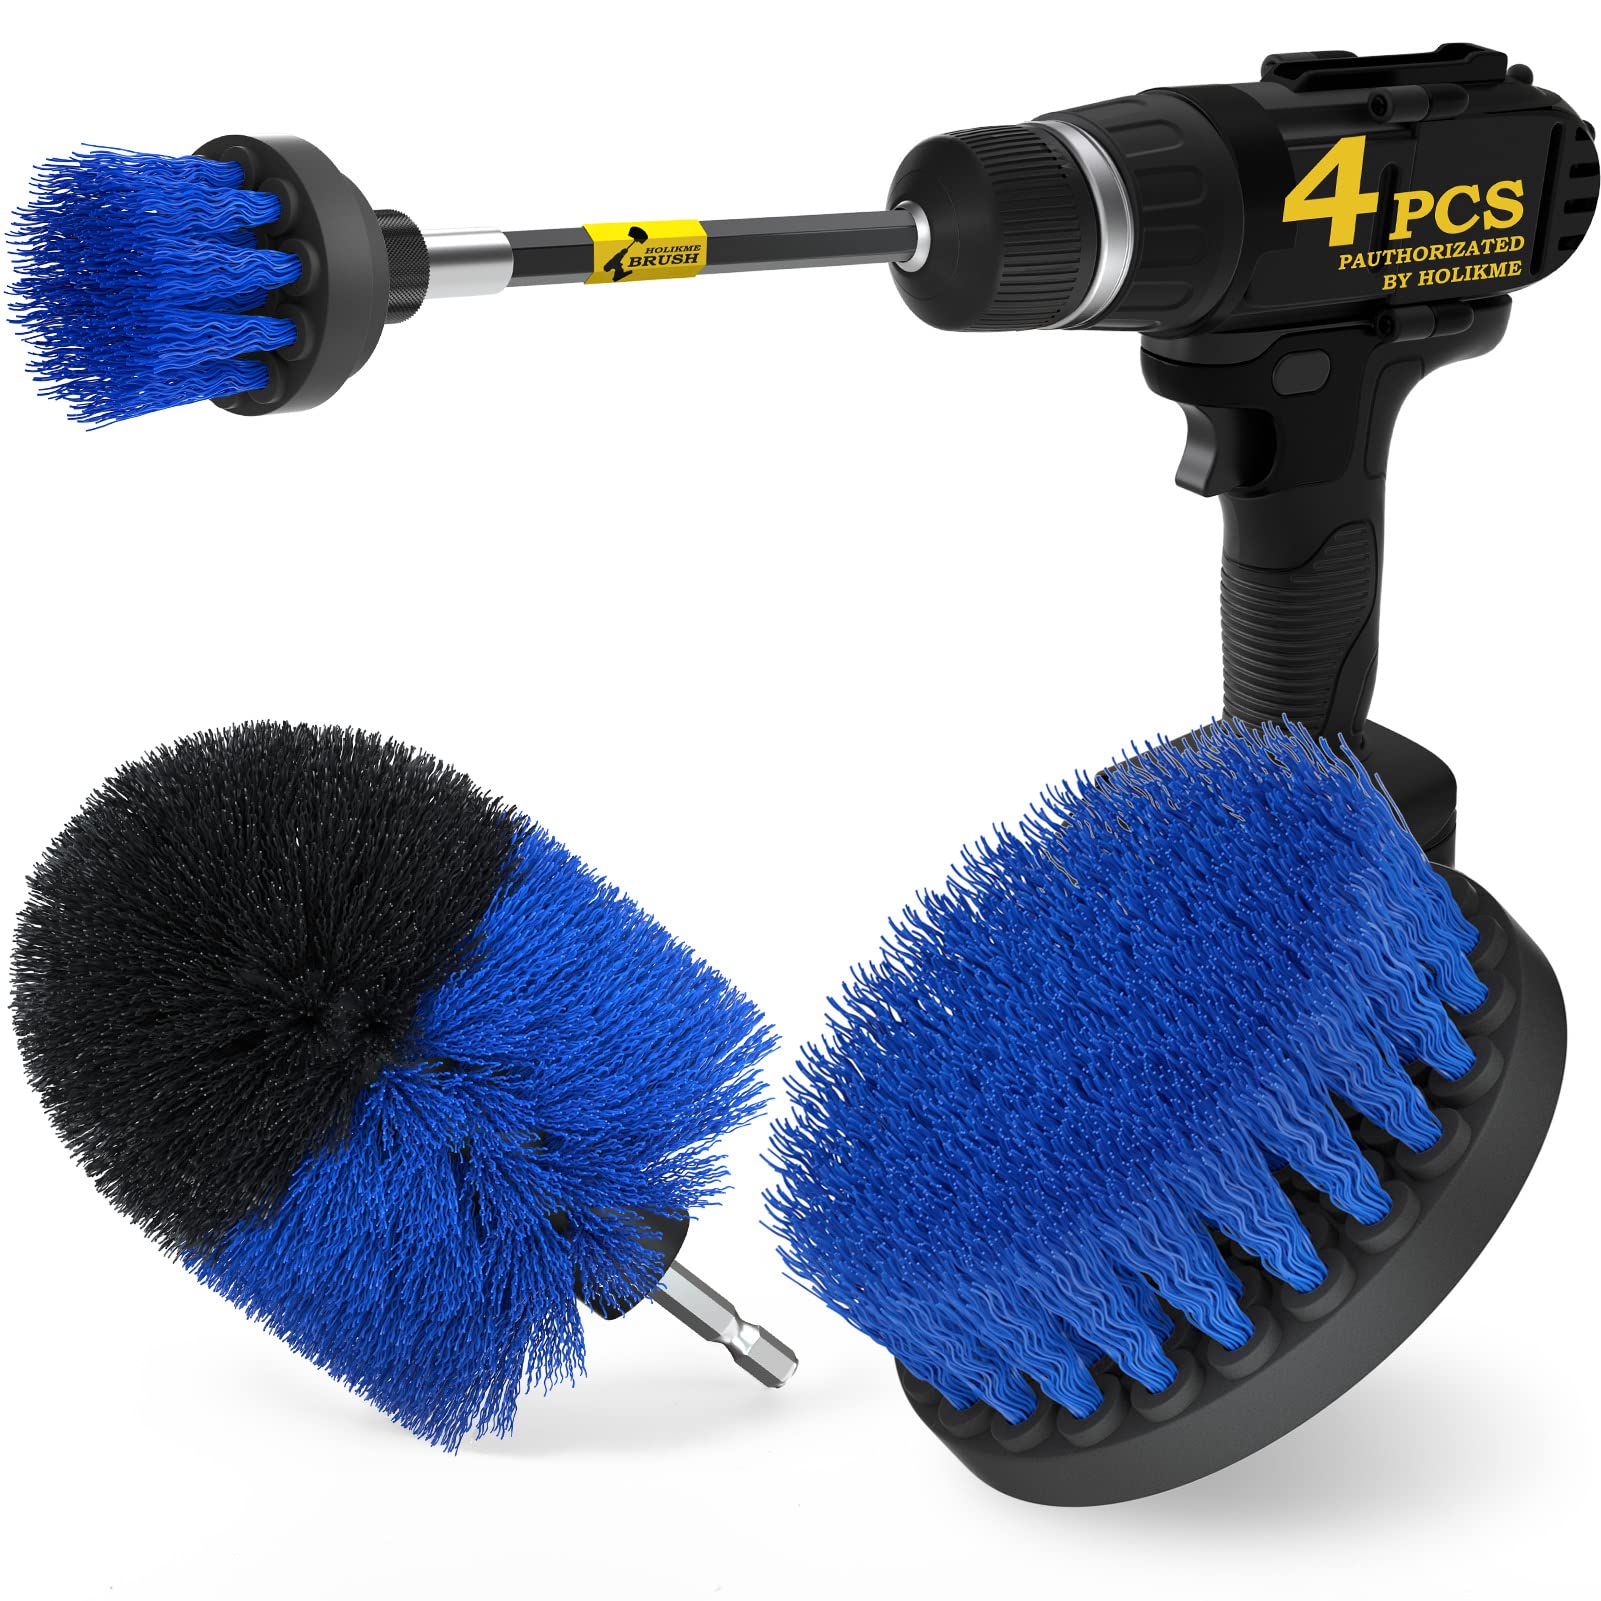 Holikme 4Pack Drill Brush Power Scrubber Cleaning Brush Extended Long Attachment Set All Purpose Drill Scrub Brushes Kit for Grout, Floor, Tub, Shower, Tile, Bathroom，Scrub Brush Blue